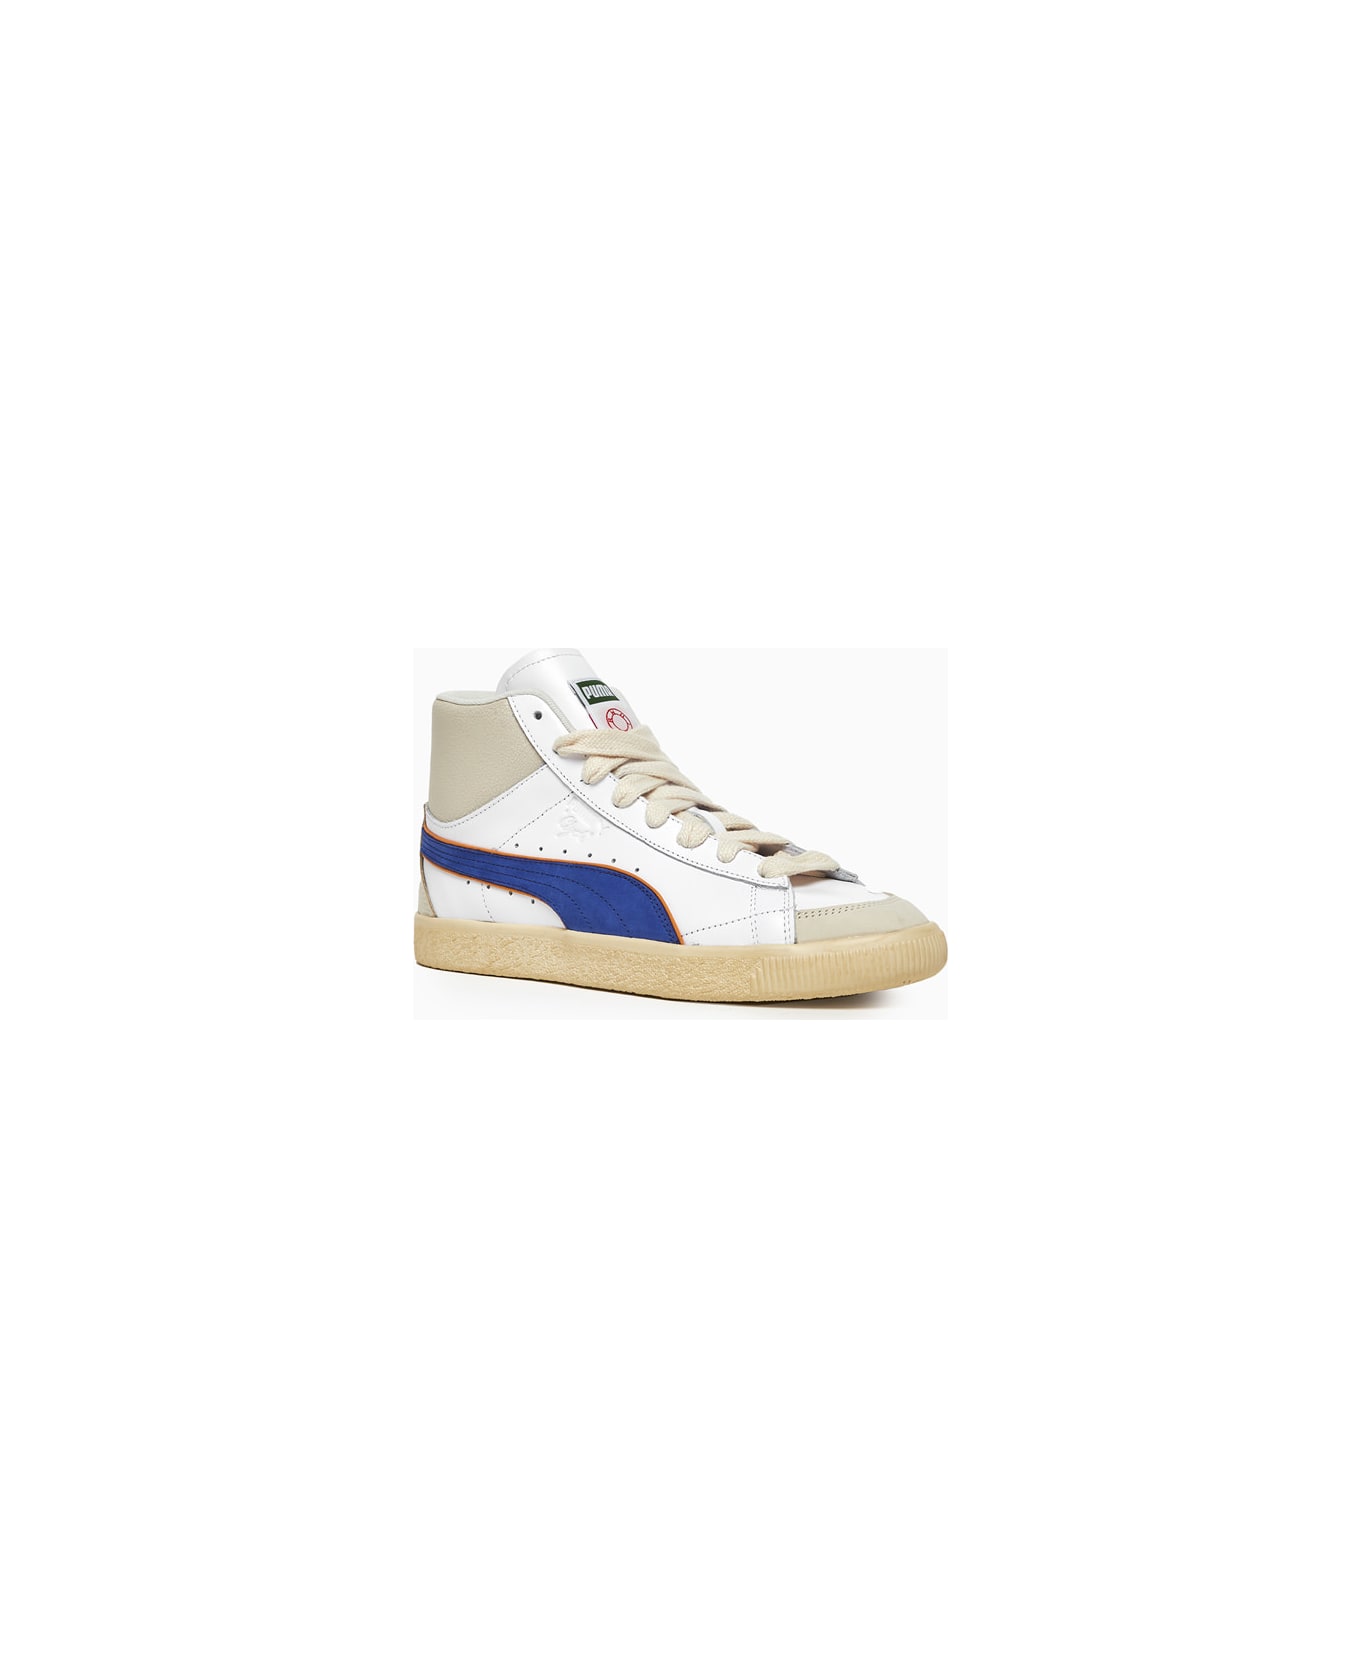 Puma X Rhuigi Clyde Mid Sneakers Bball - White Royal Sapphire